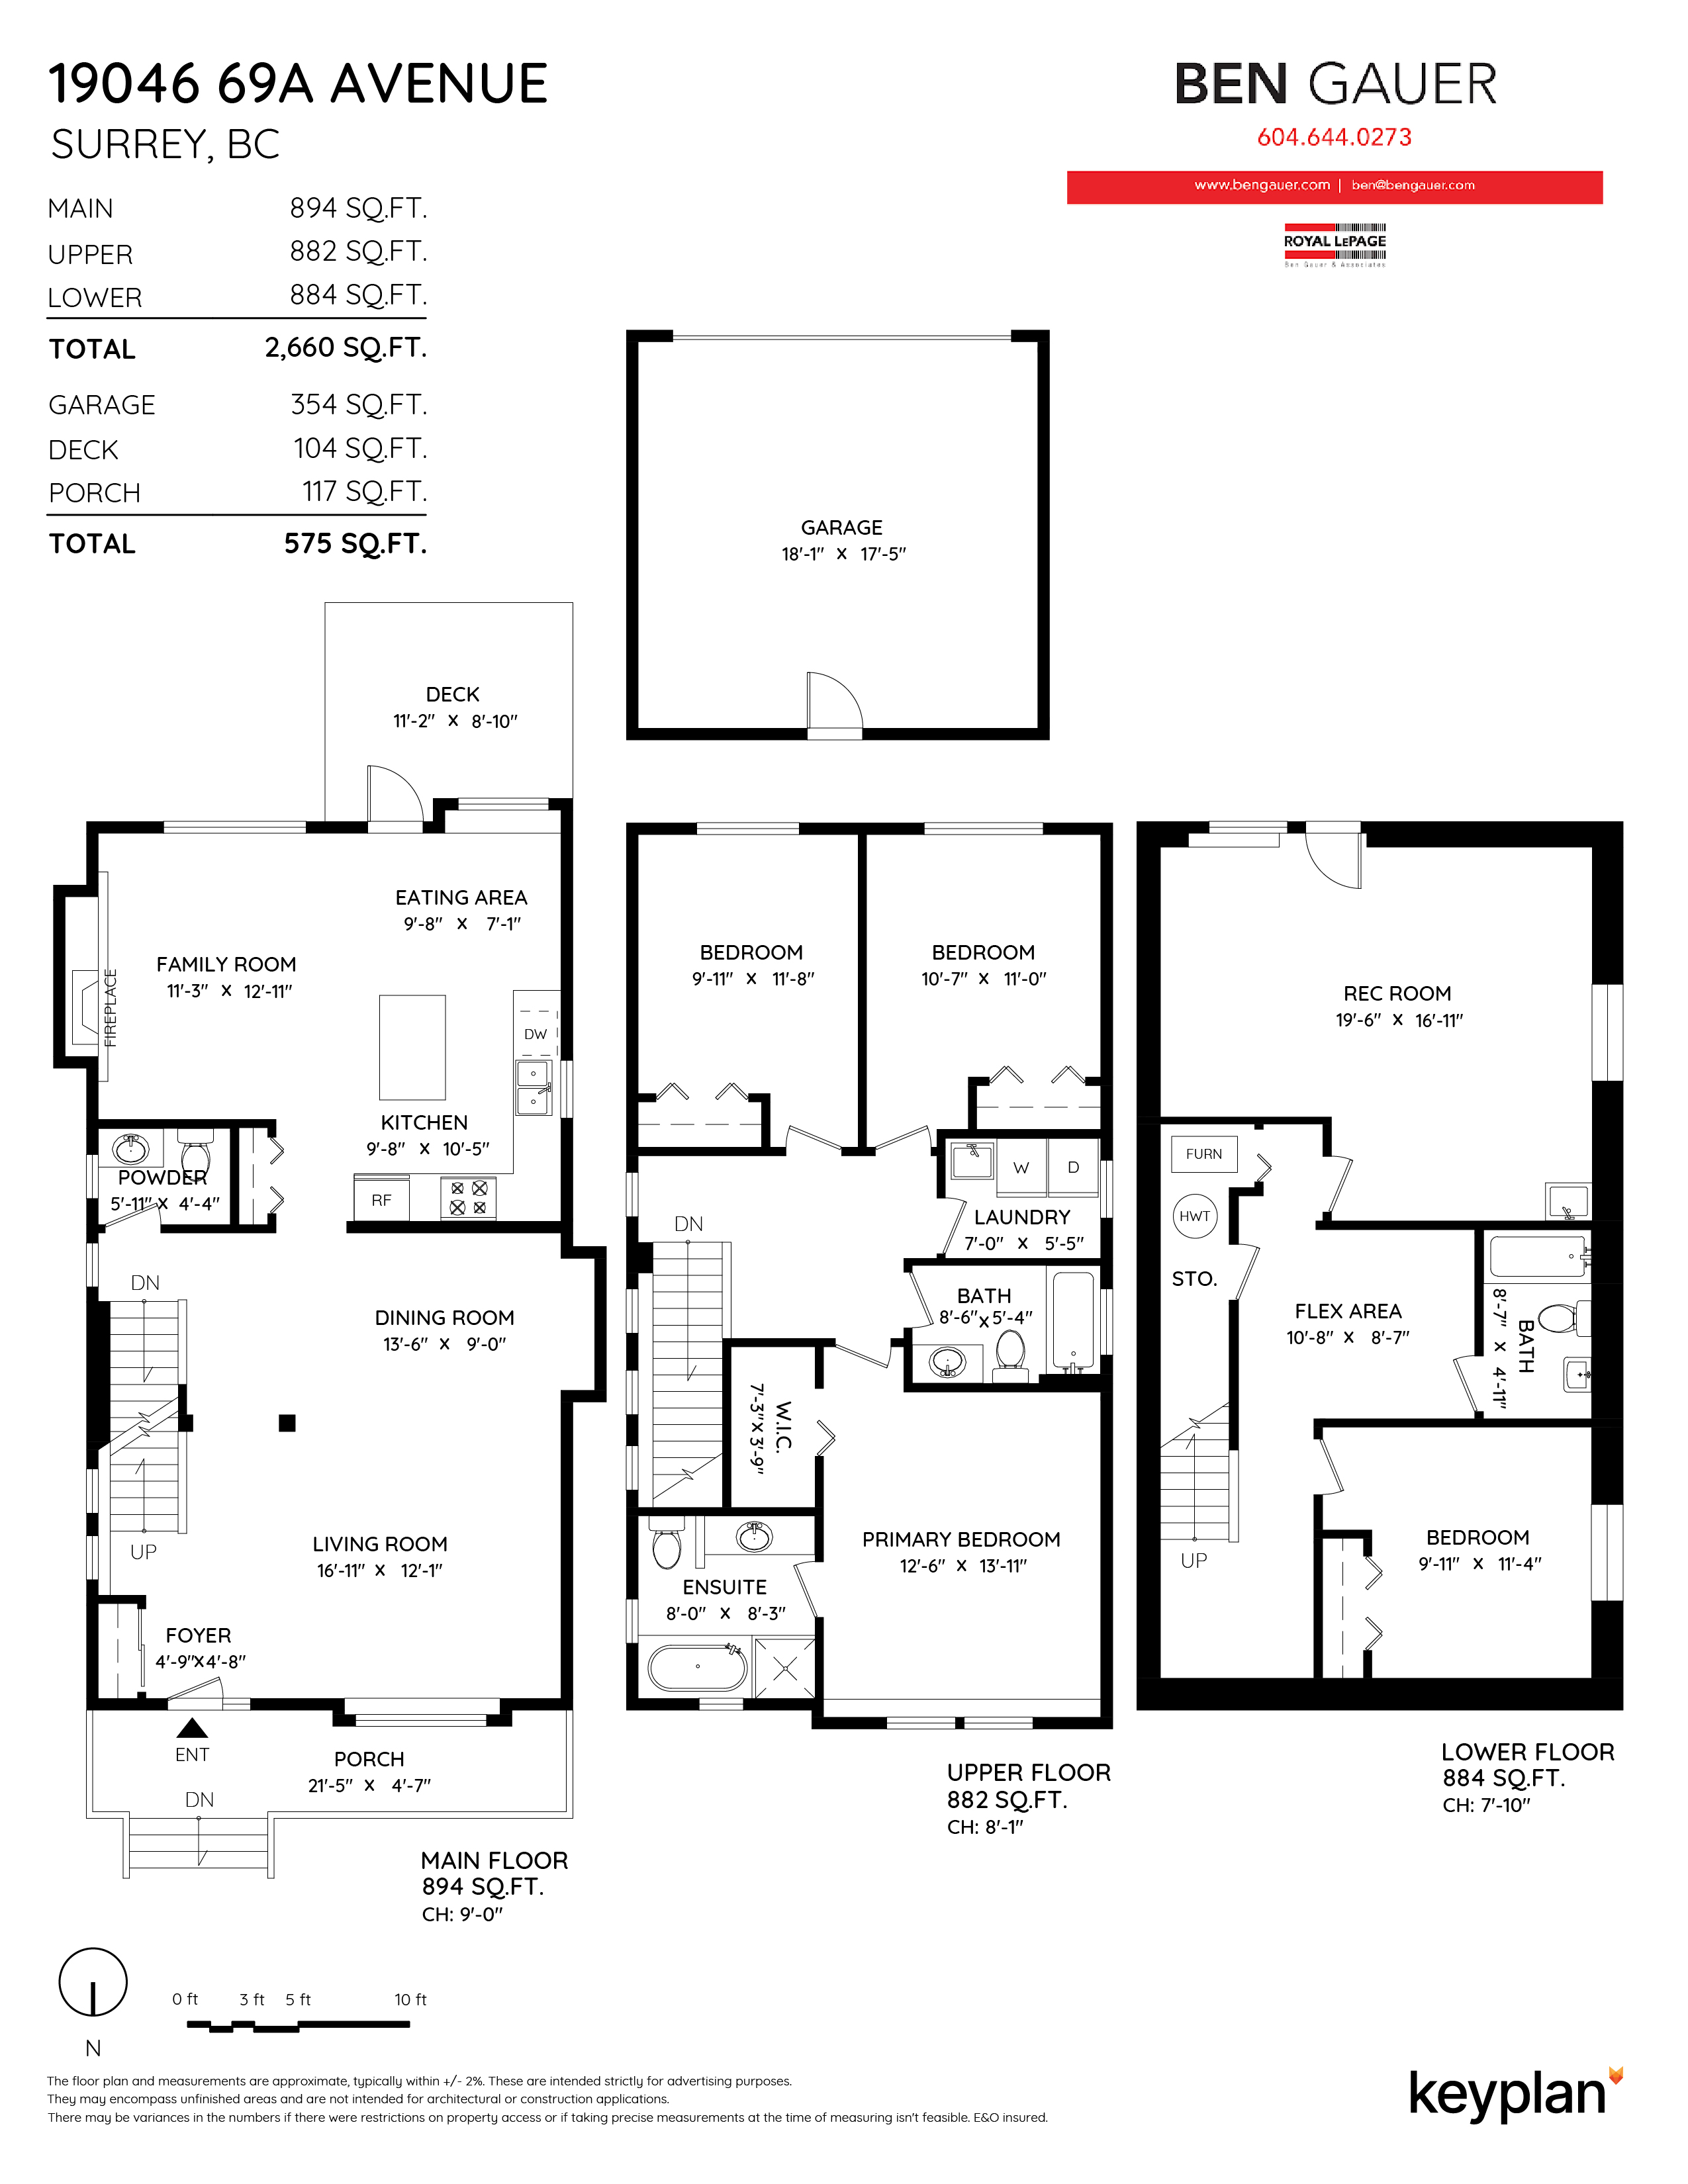 Ben Gauer - 19046 69A Avenue, Surrey, BC, Canada V4N 0A5 | Floor Plan 1